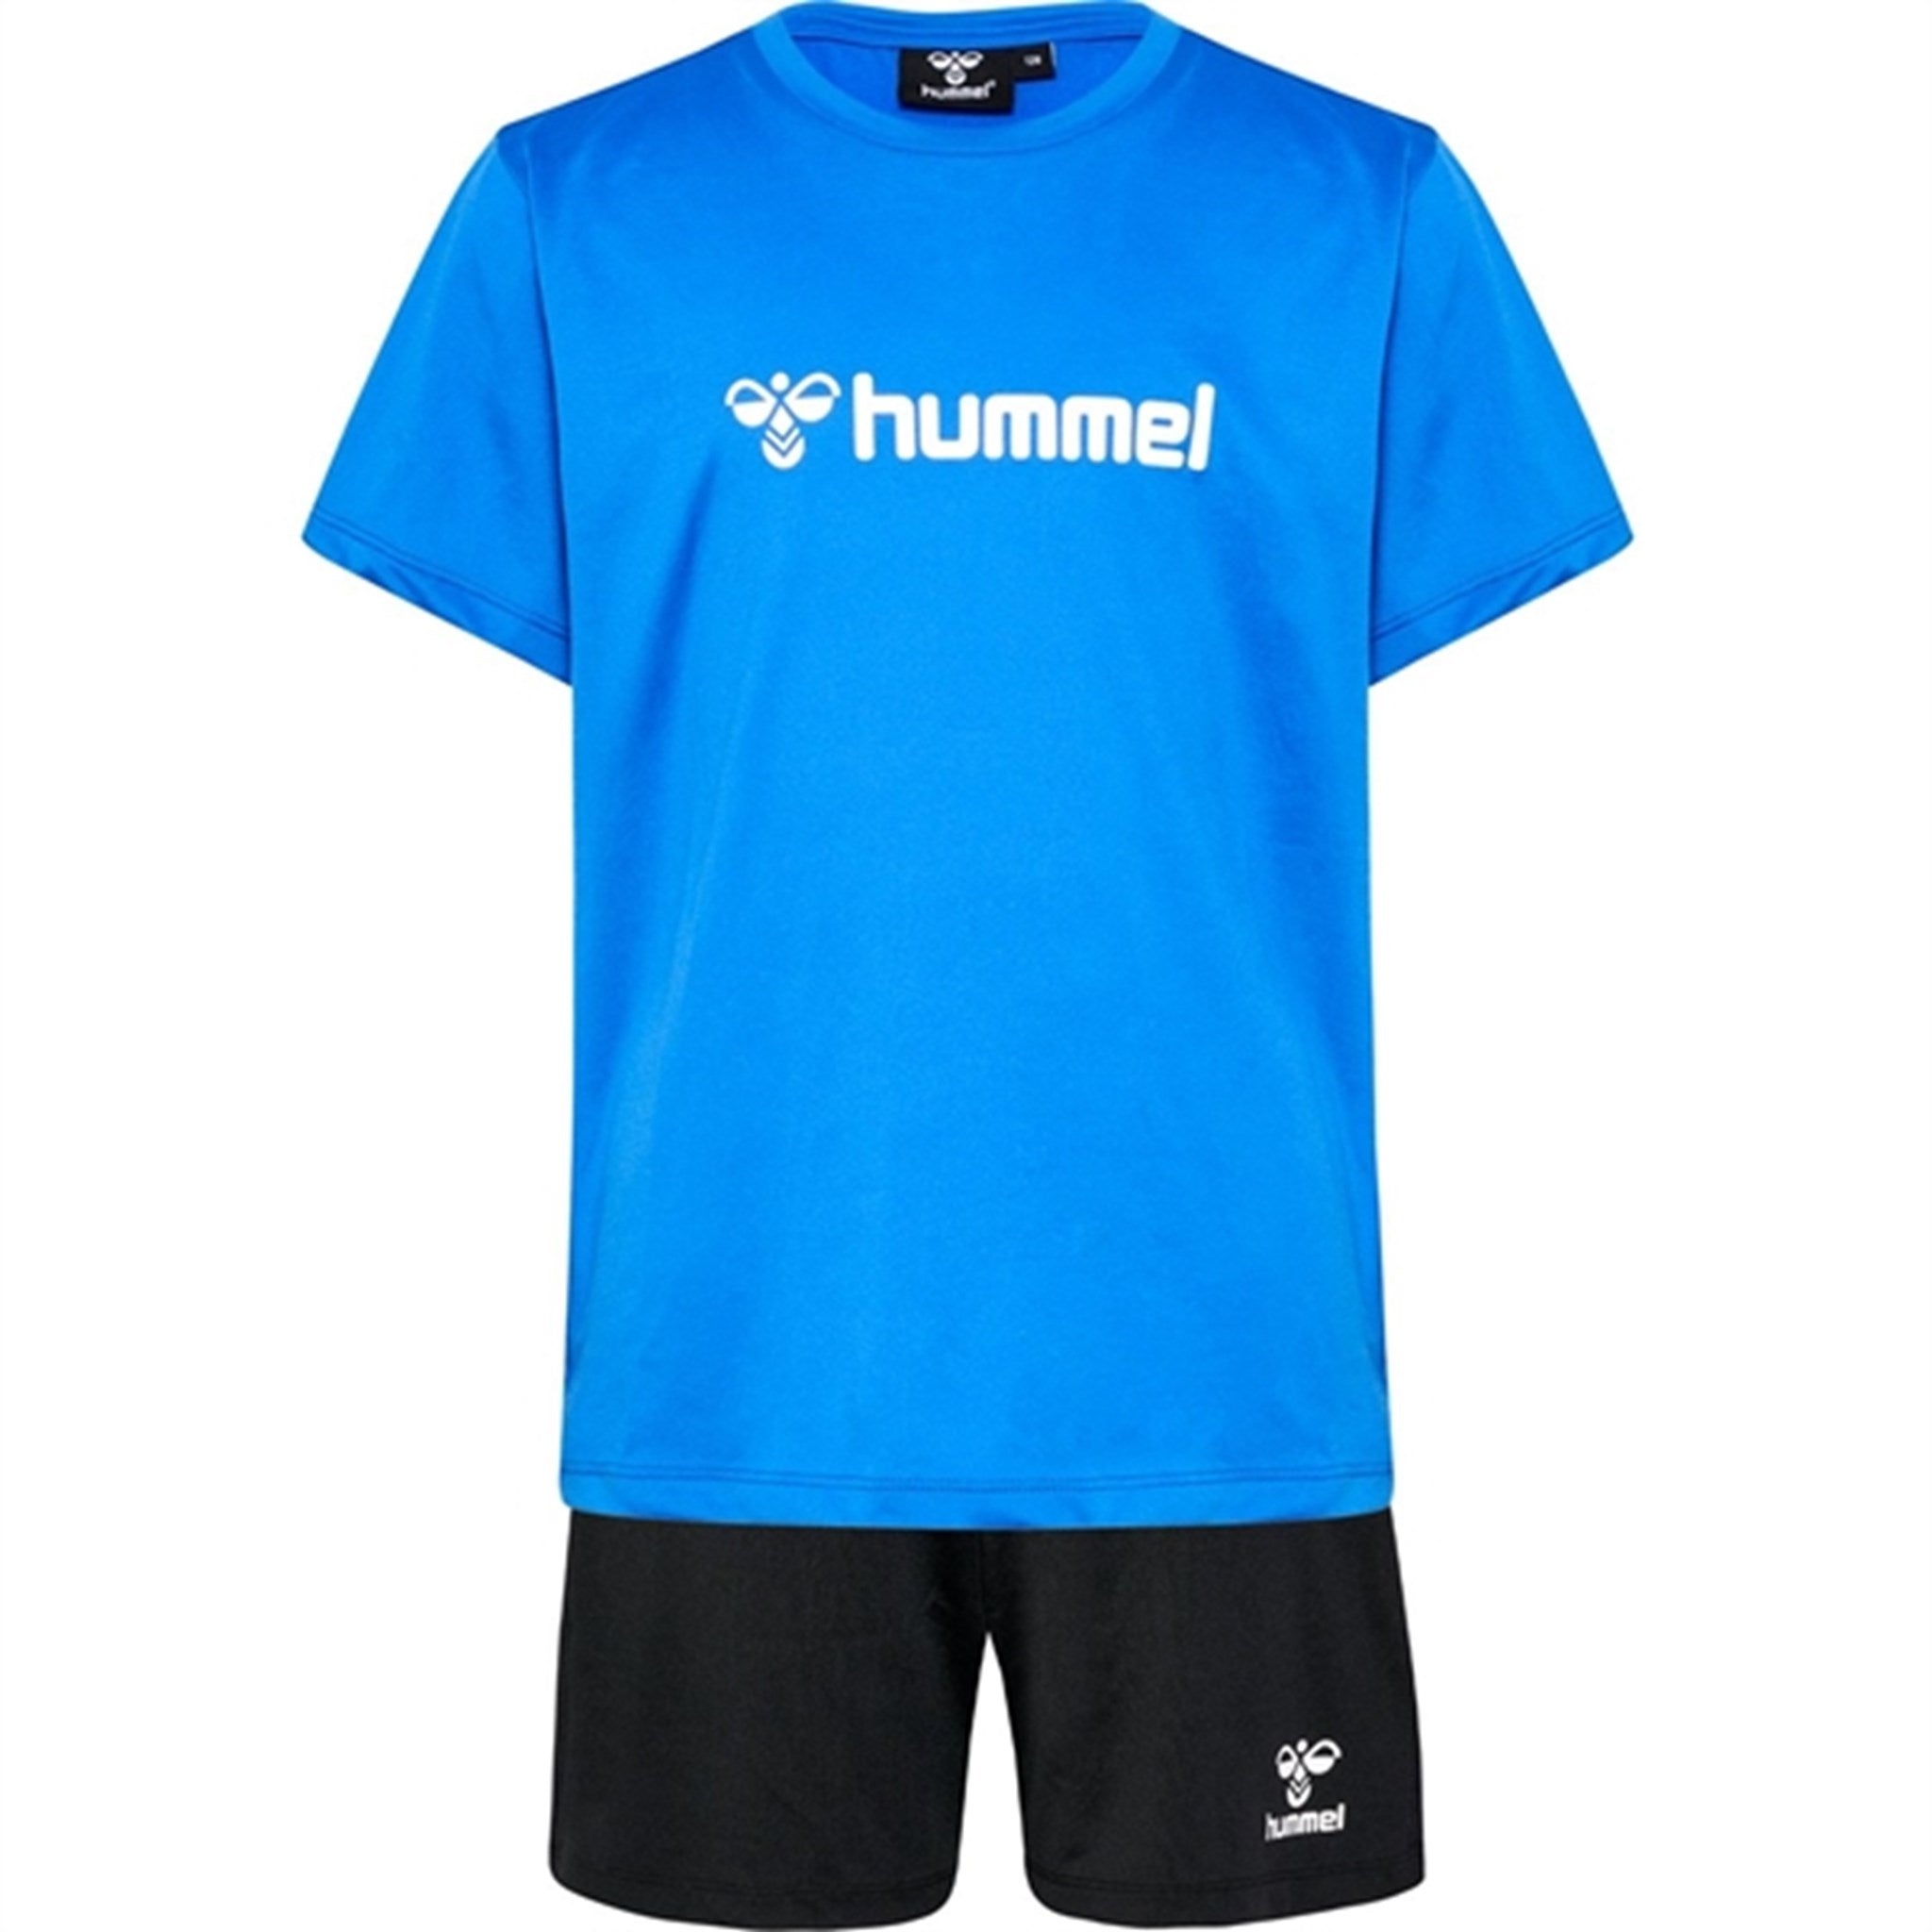 Hummel Nebulas Blue Polyesterag Shorts Set